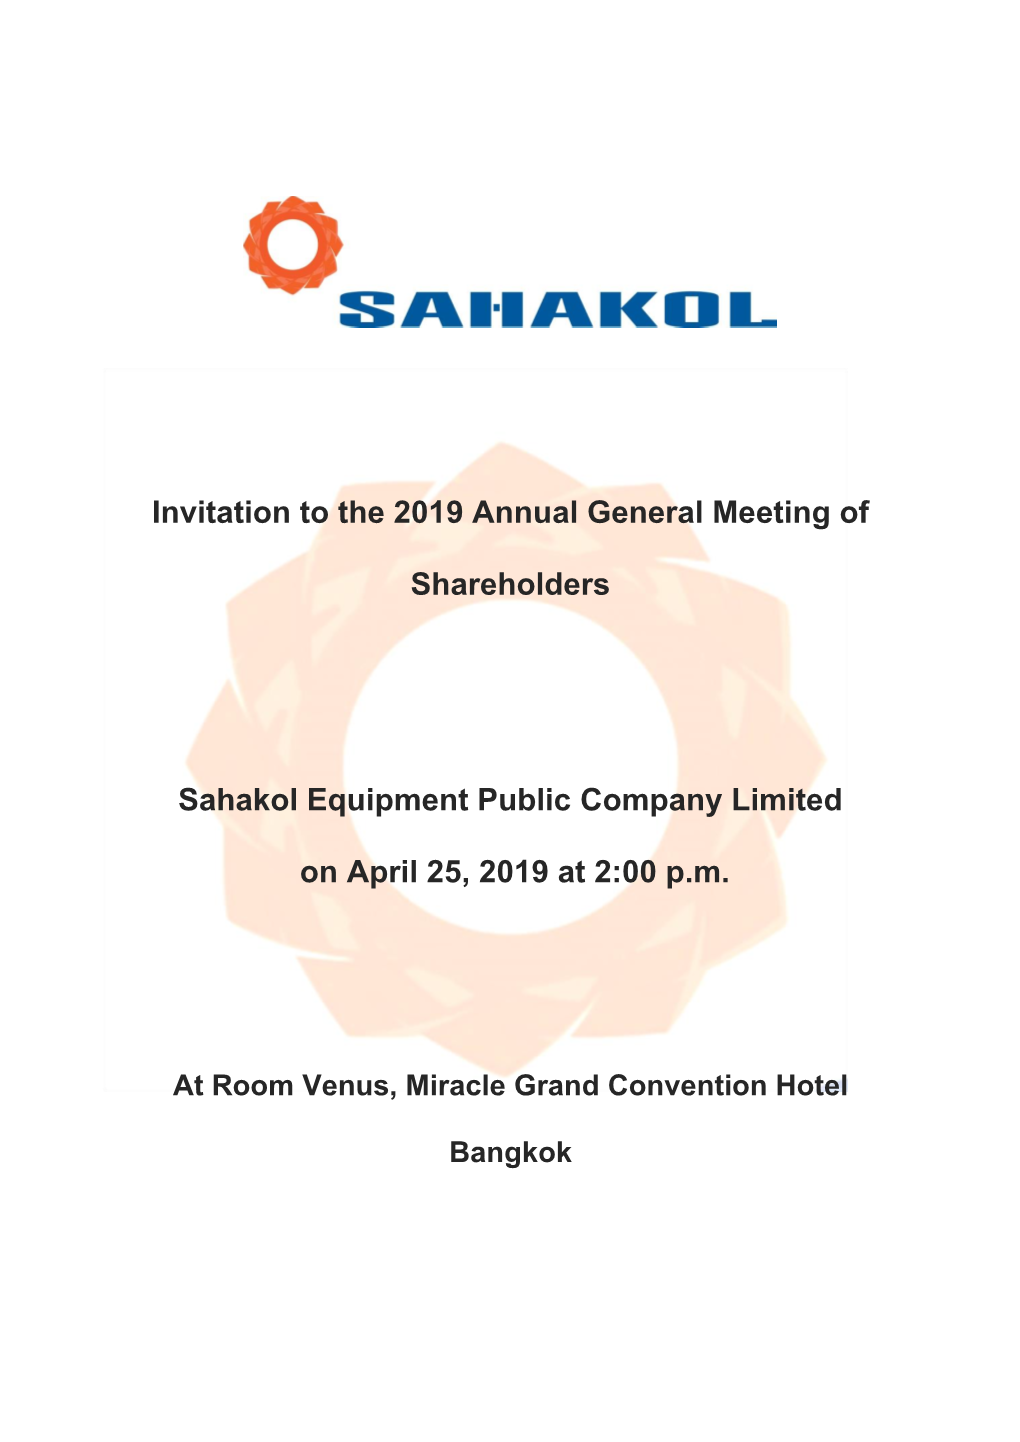 Invitation to the 2019 Annual General Meeting of Shareholders Sahakol